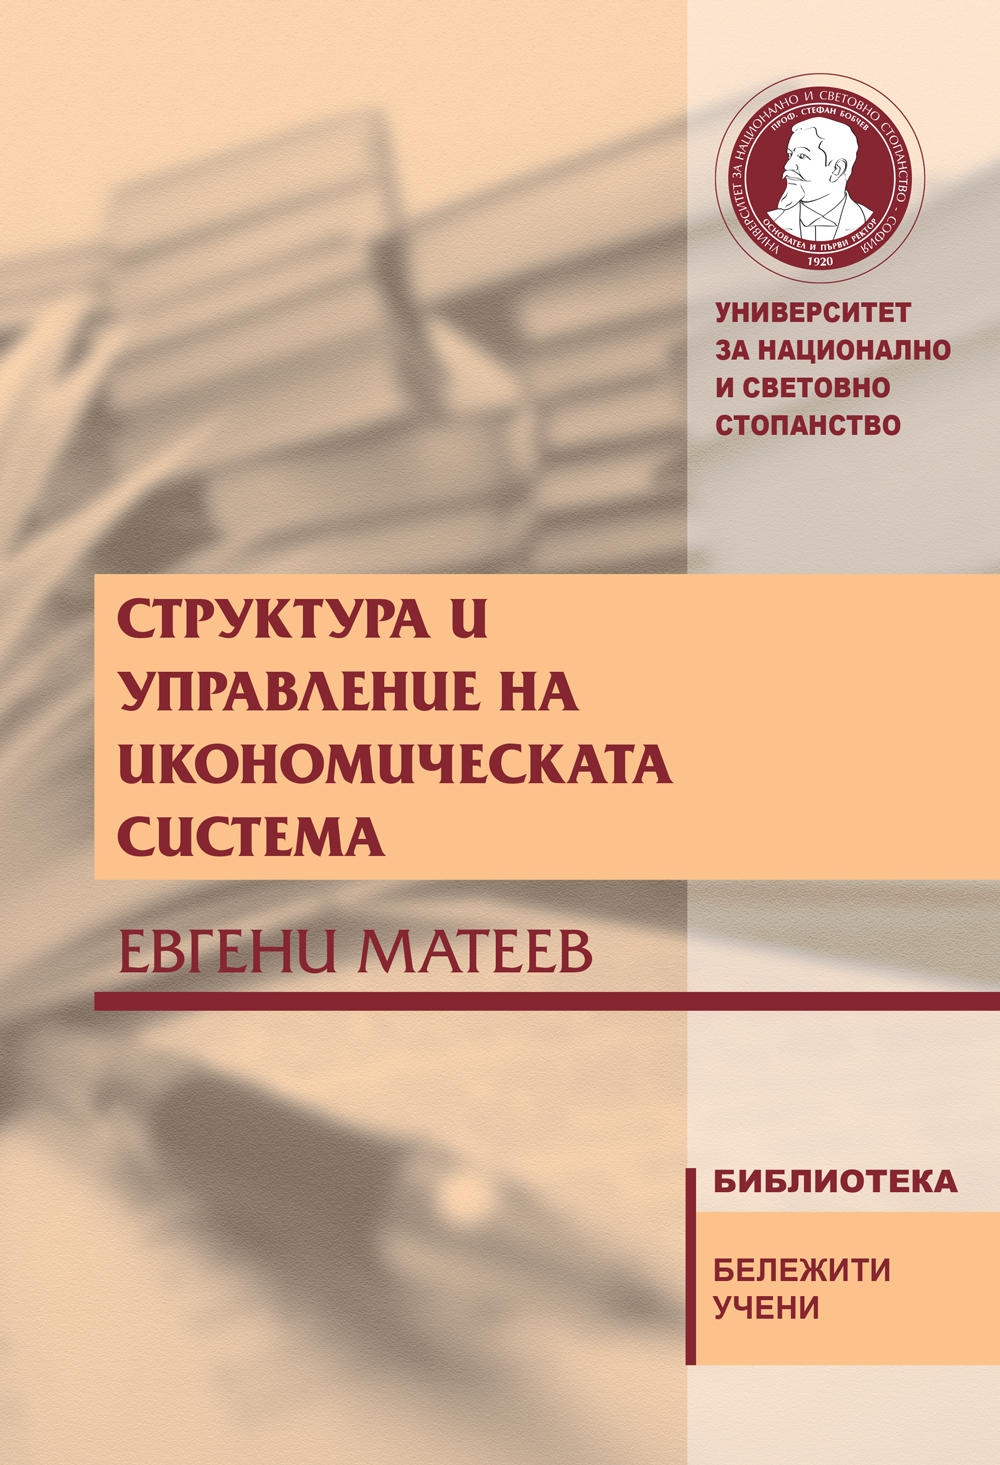 http://books.unwe.bg/wp-content/uploads/2015/10/Evgeni-Mateev.korica.s.jpg